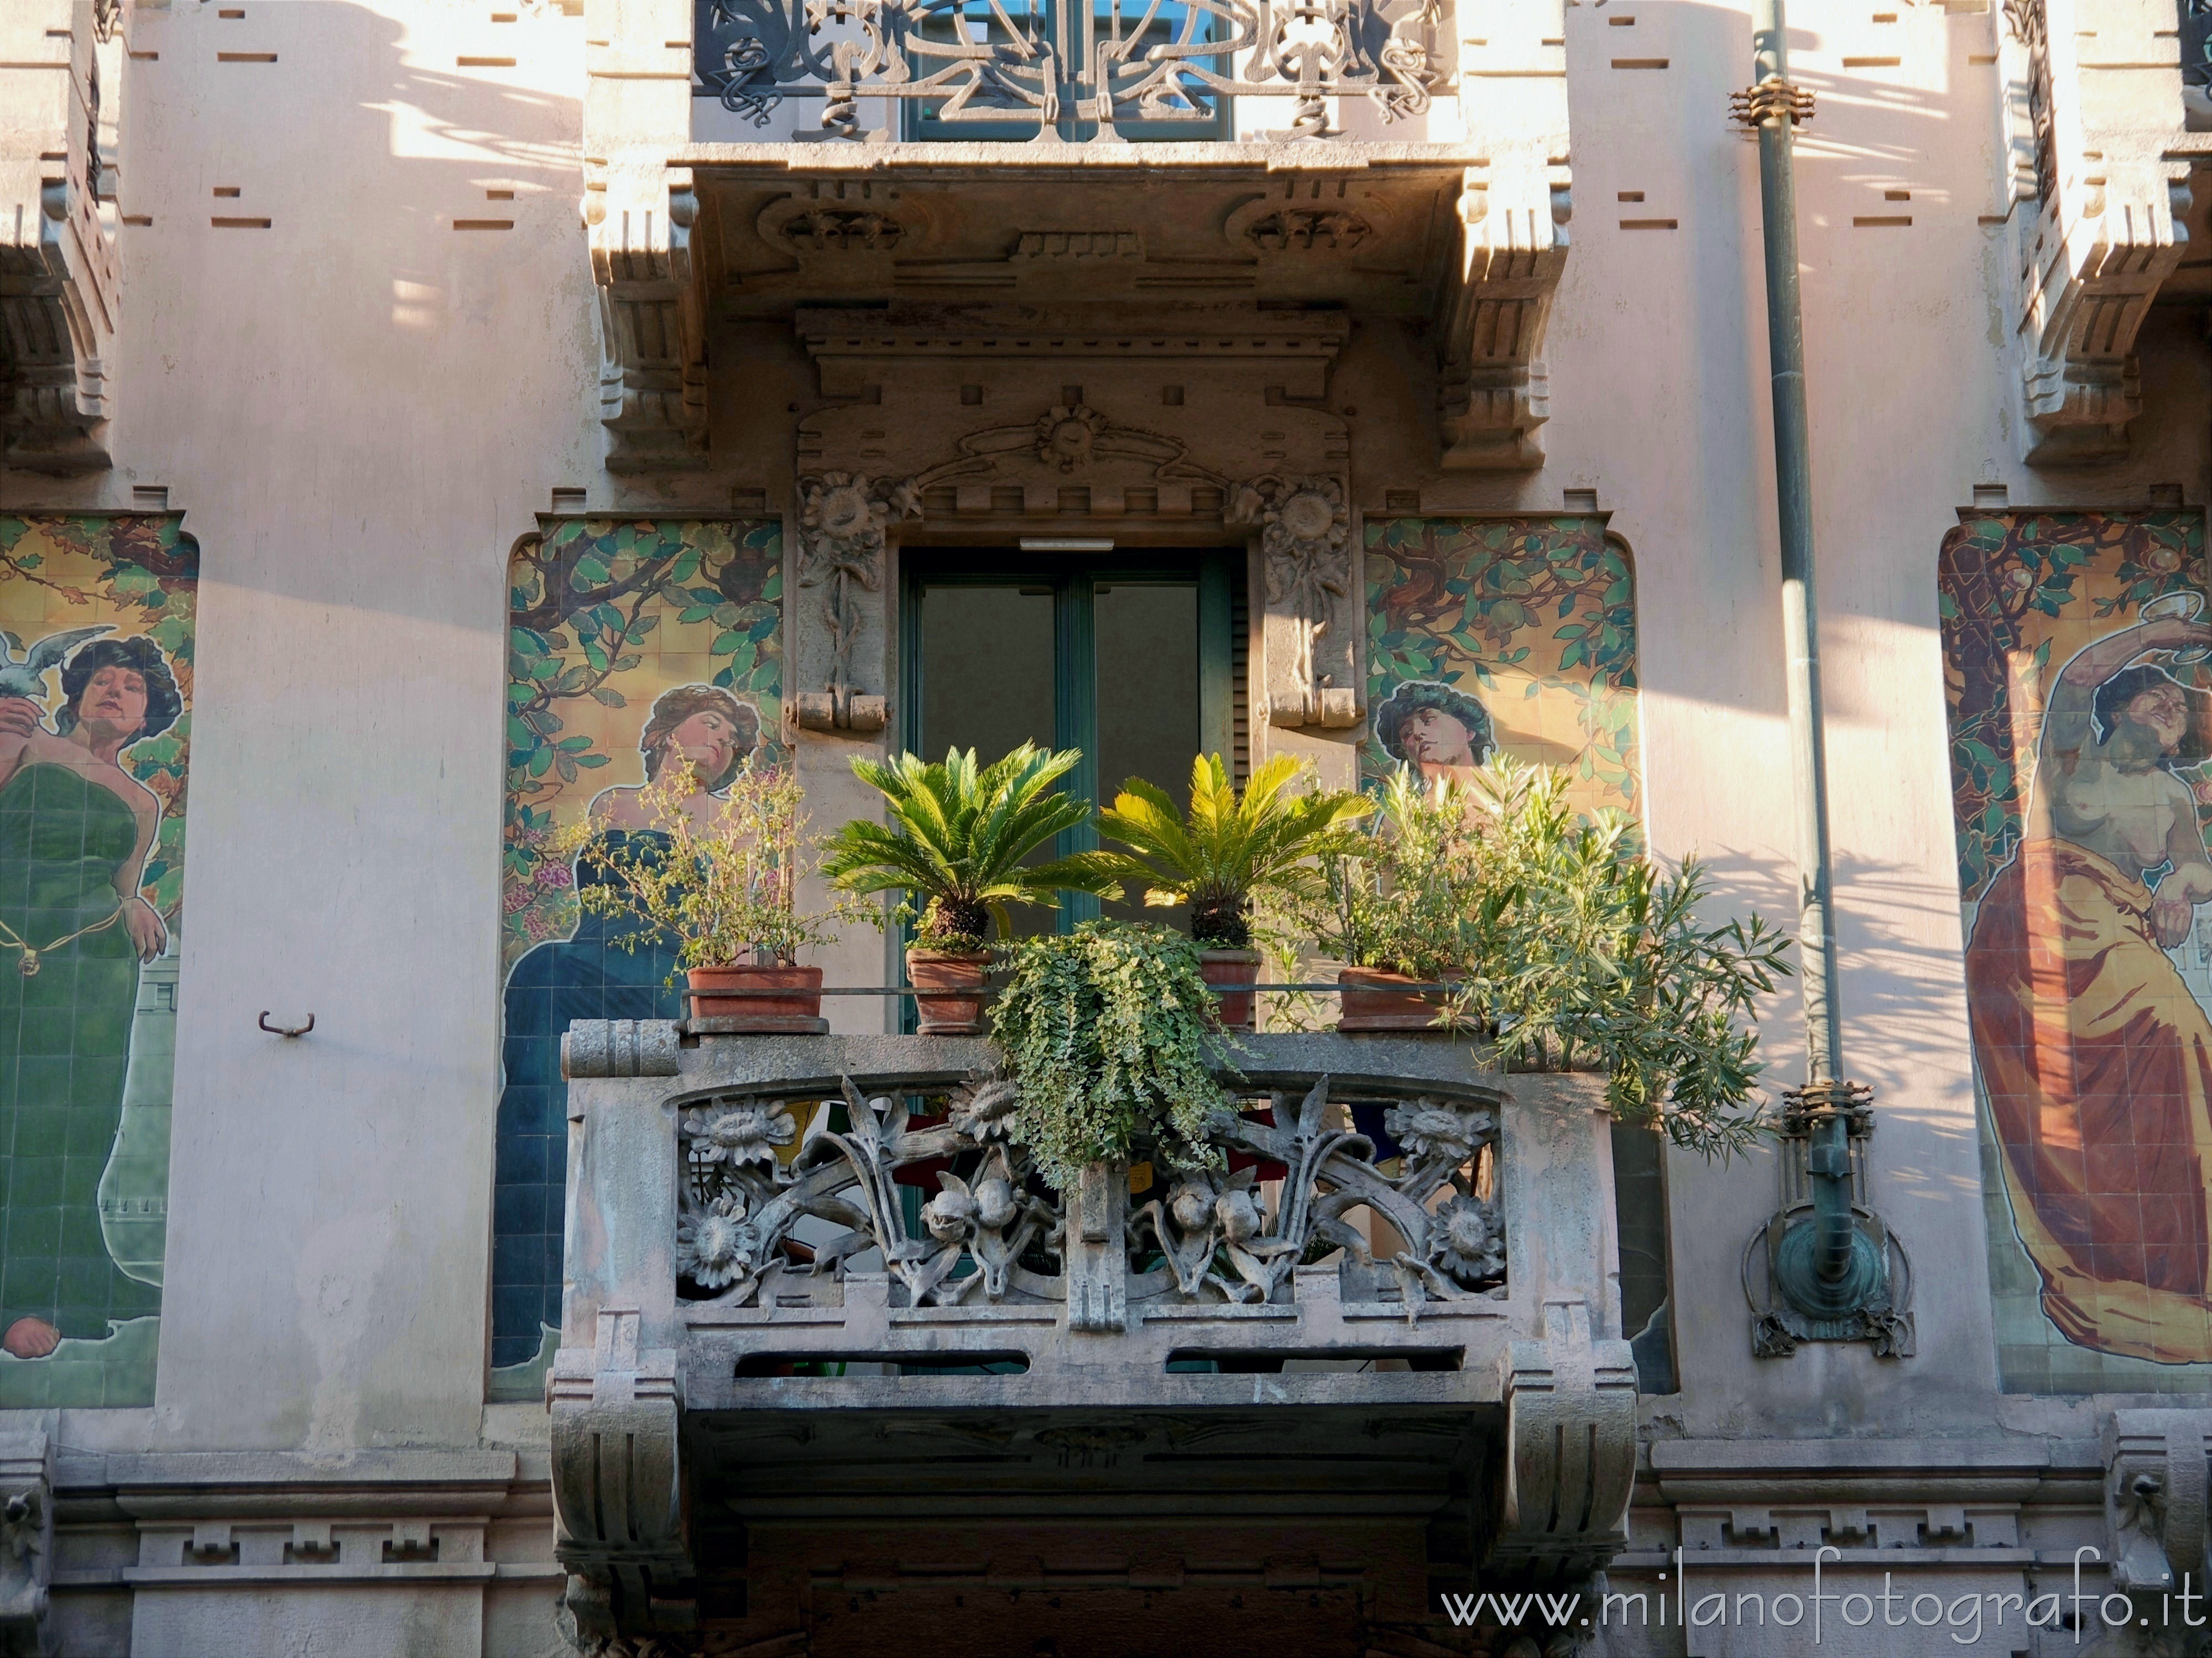 Milan (Italy): Art Noveau balcony and decorations in House Galimberti - Milan (Italy)